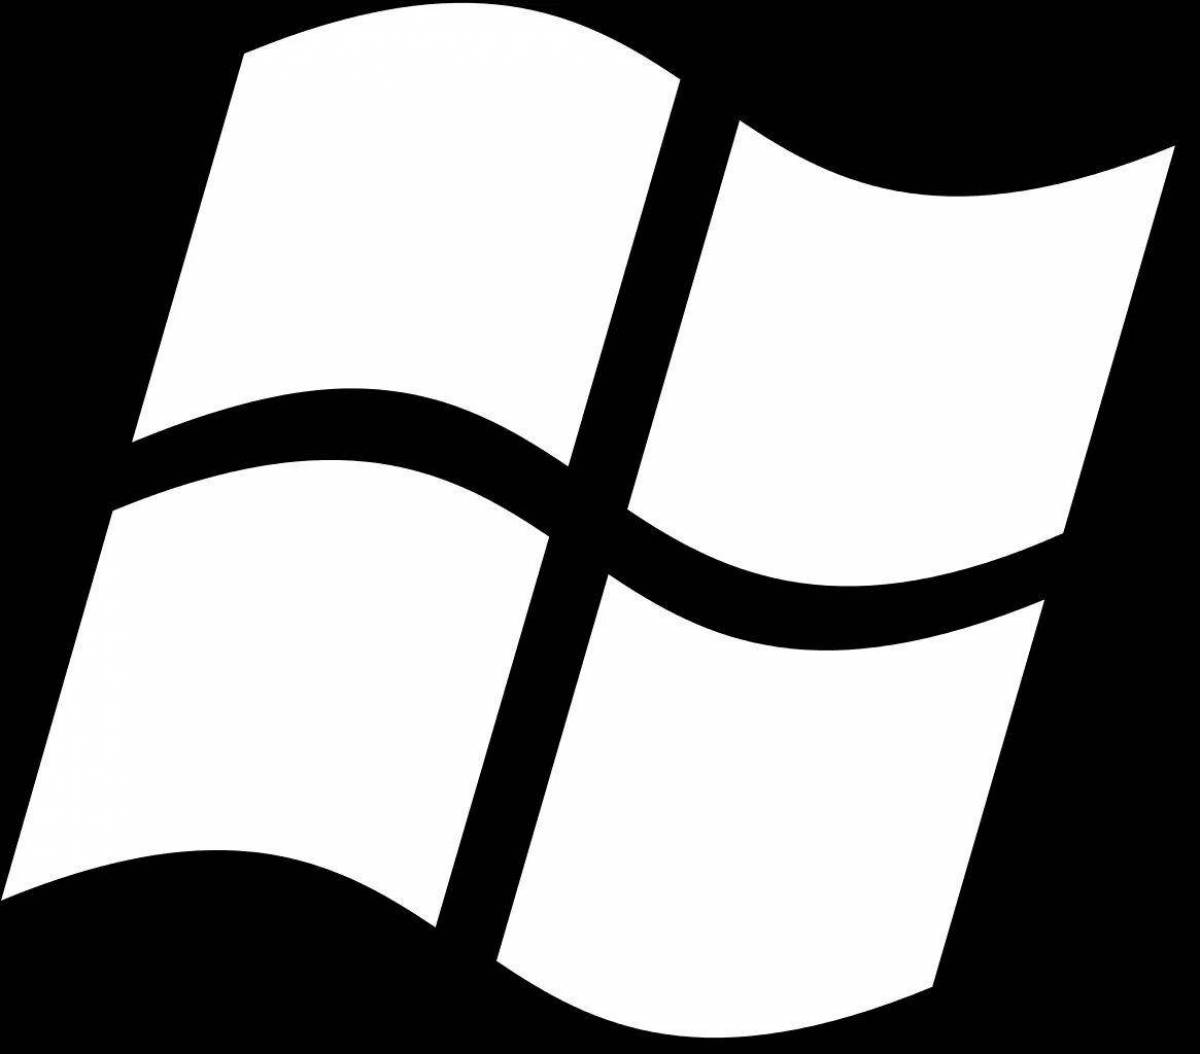 Microsoft icon. Значок виндовс. Значок виндовс белый. Значок виндовс черно белый. Логотип Windows.